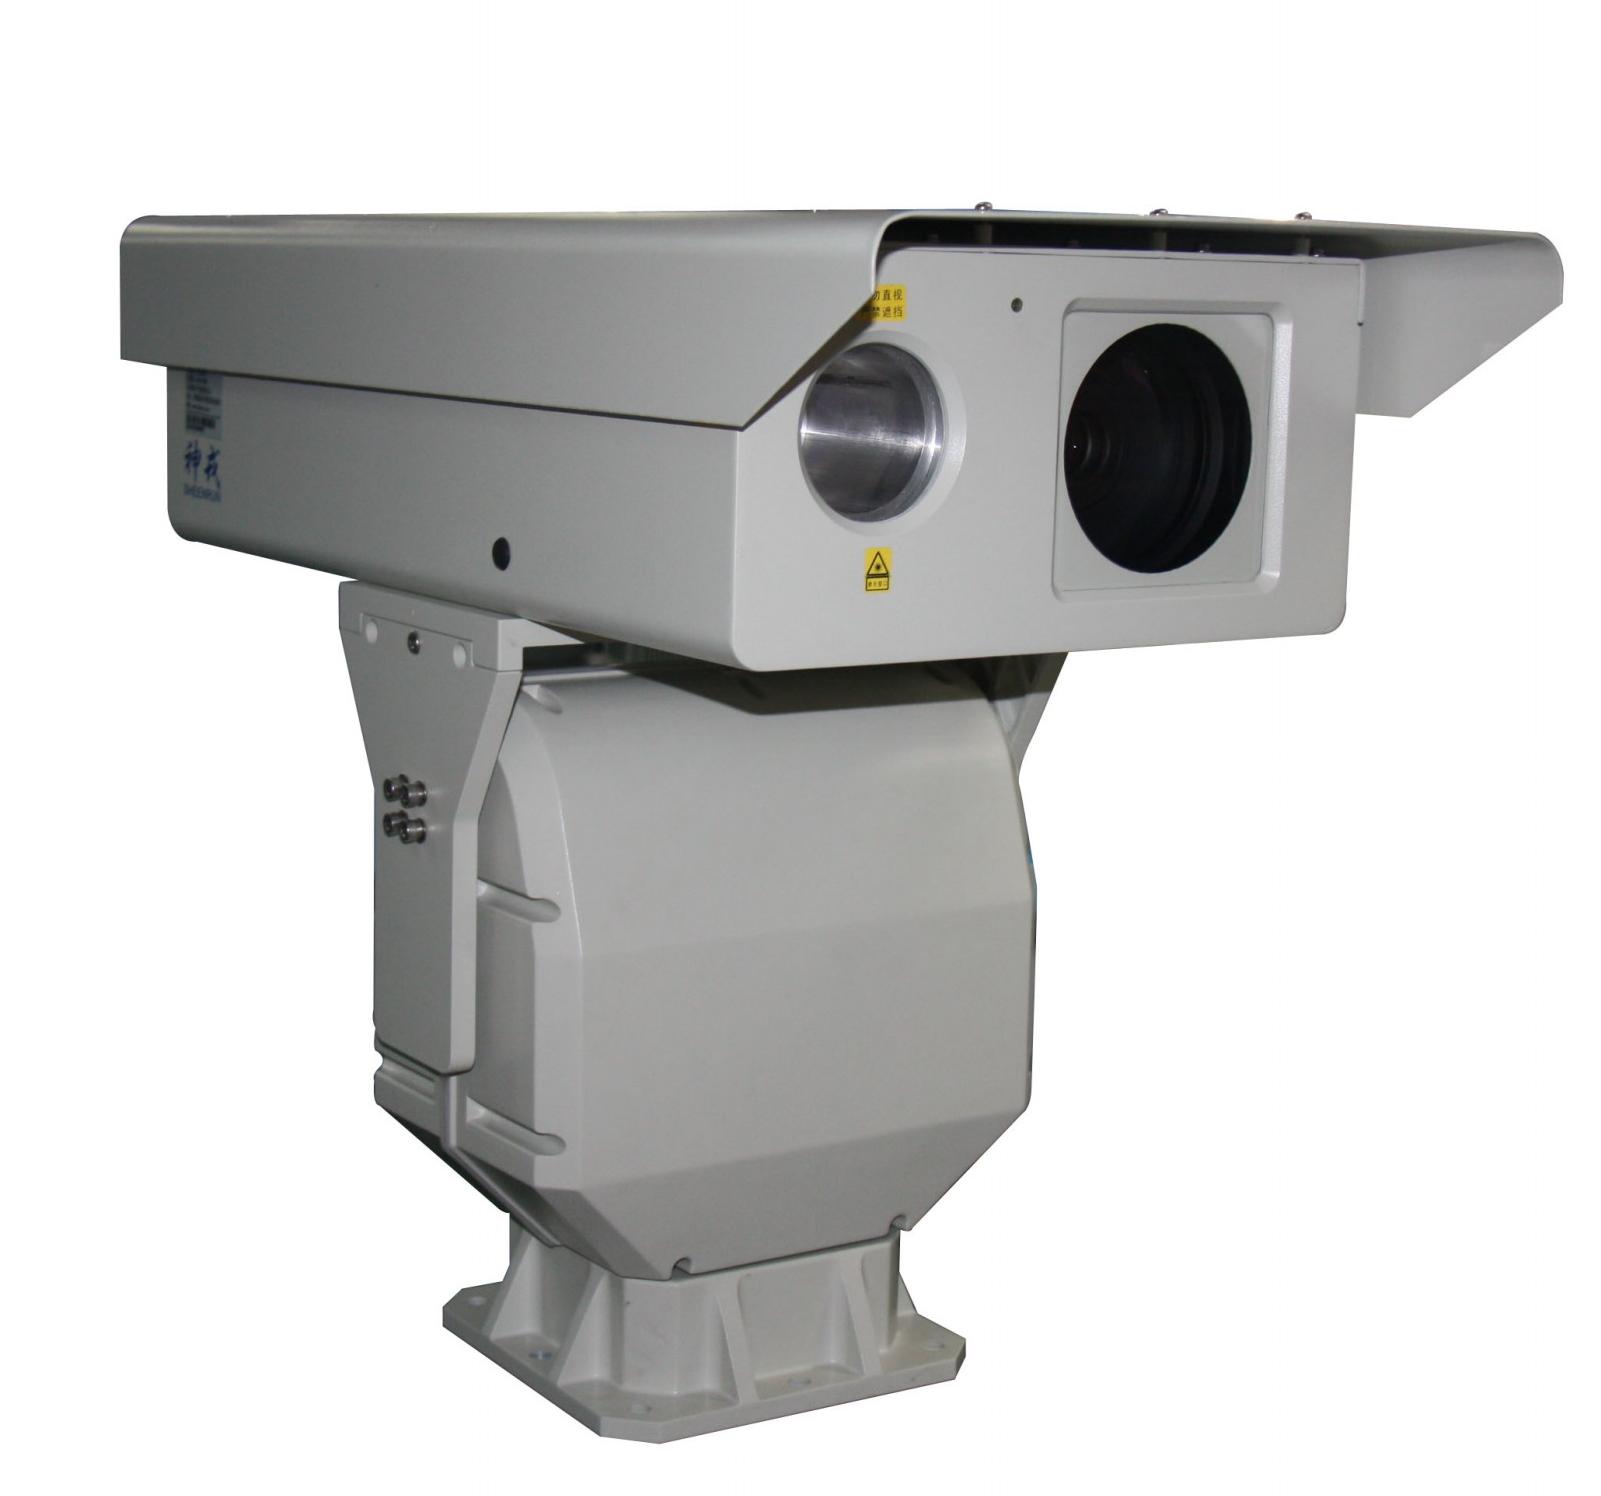 LV3000 Long Range Night Vision Camera